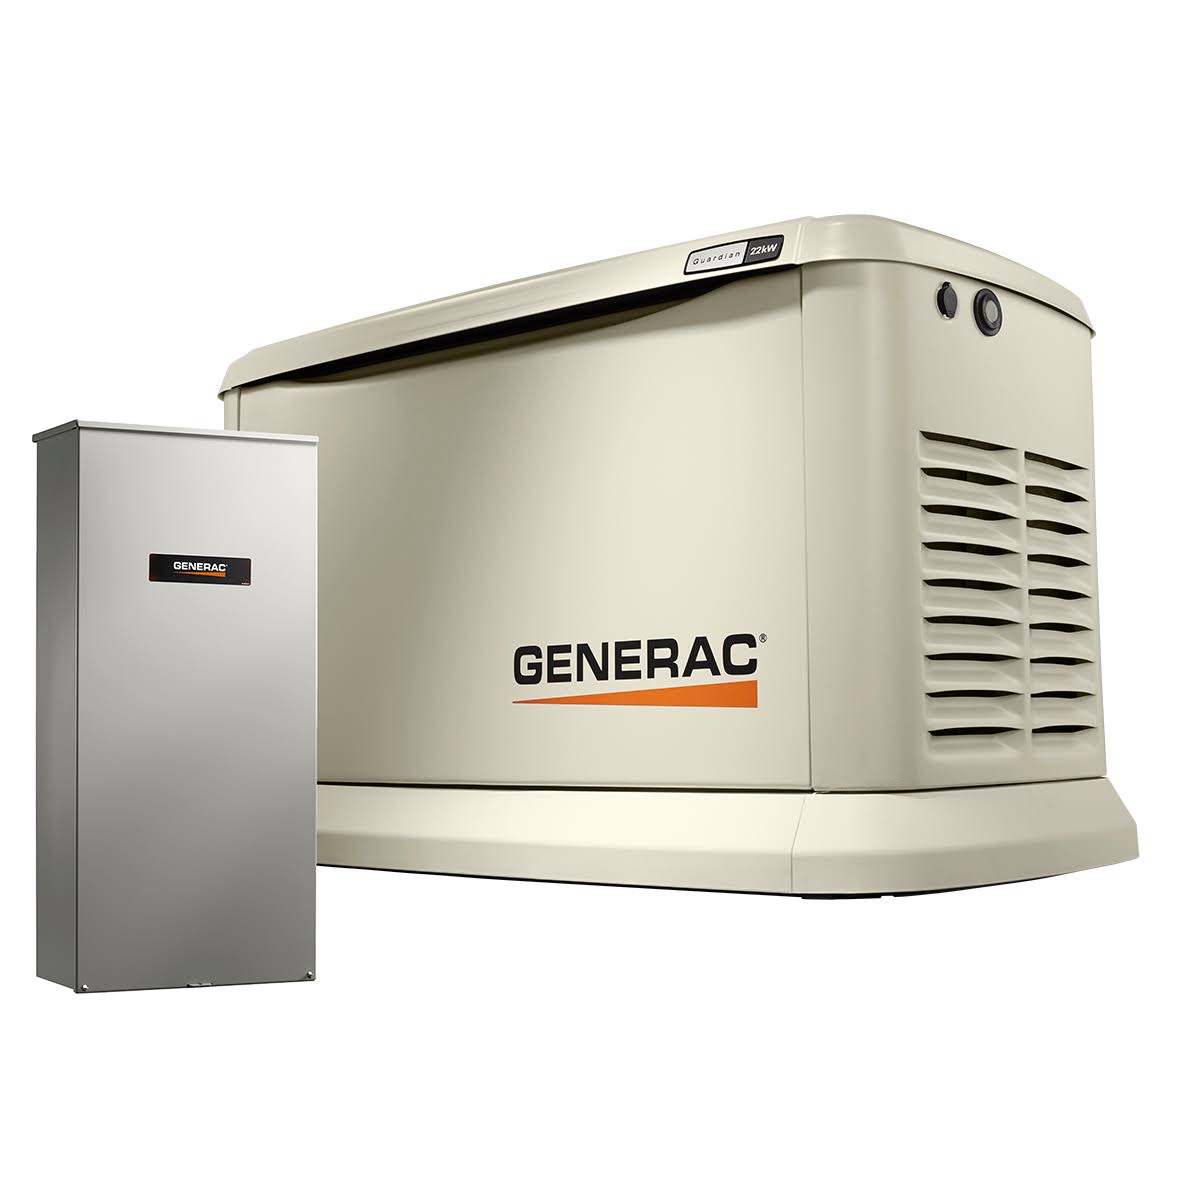 Generac Guardian Generac 7043 ガーディアン シリーズ 22kW/19.5kW 空冷家庭用スタンバイ発電機、家全体 200 アンペア転送スイッチ付き (CUL ではない)